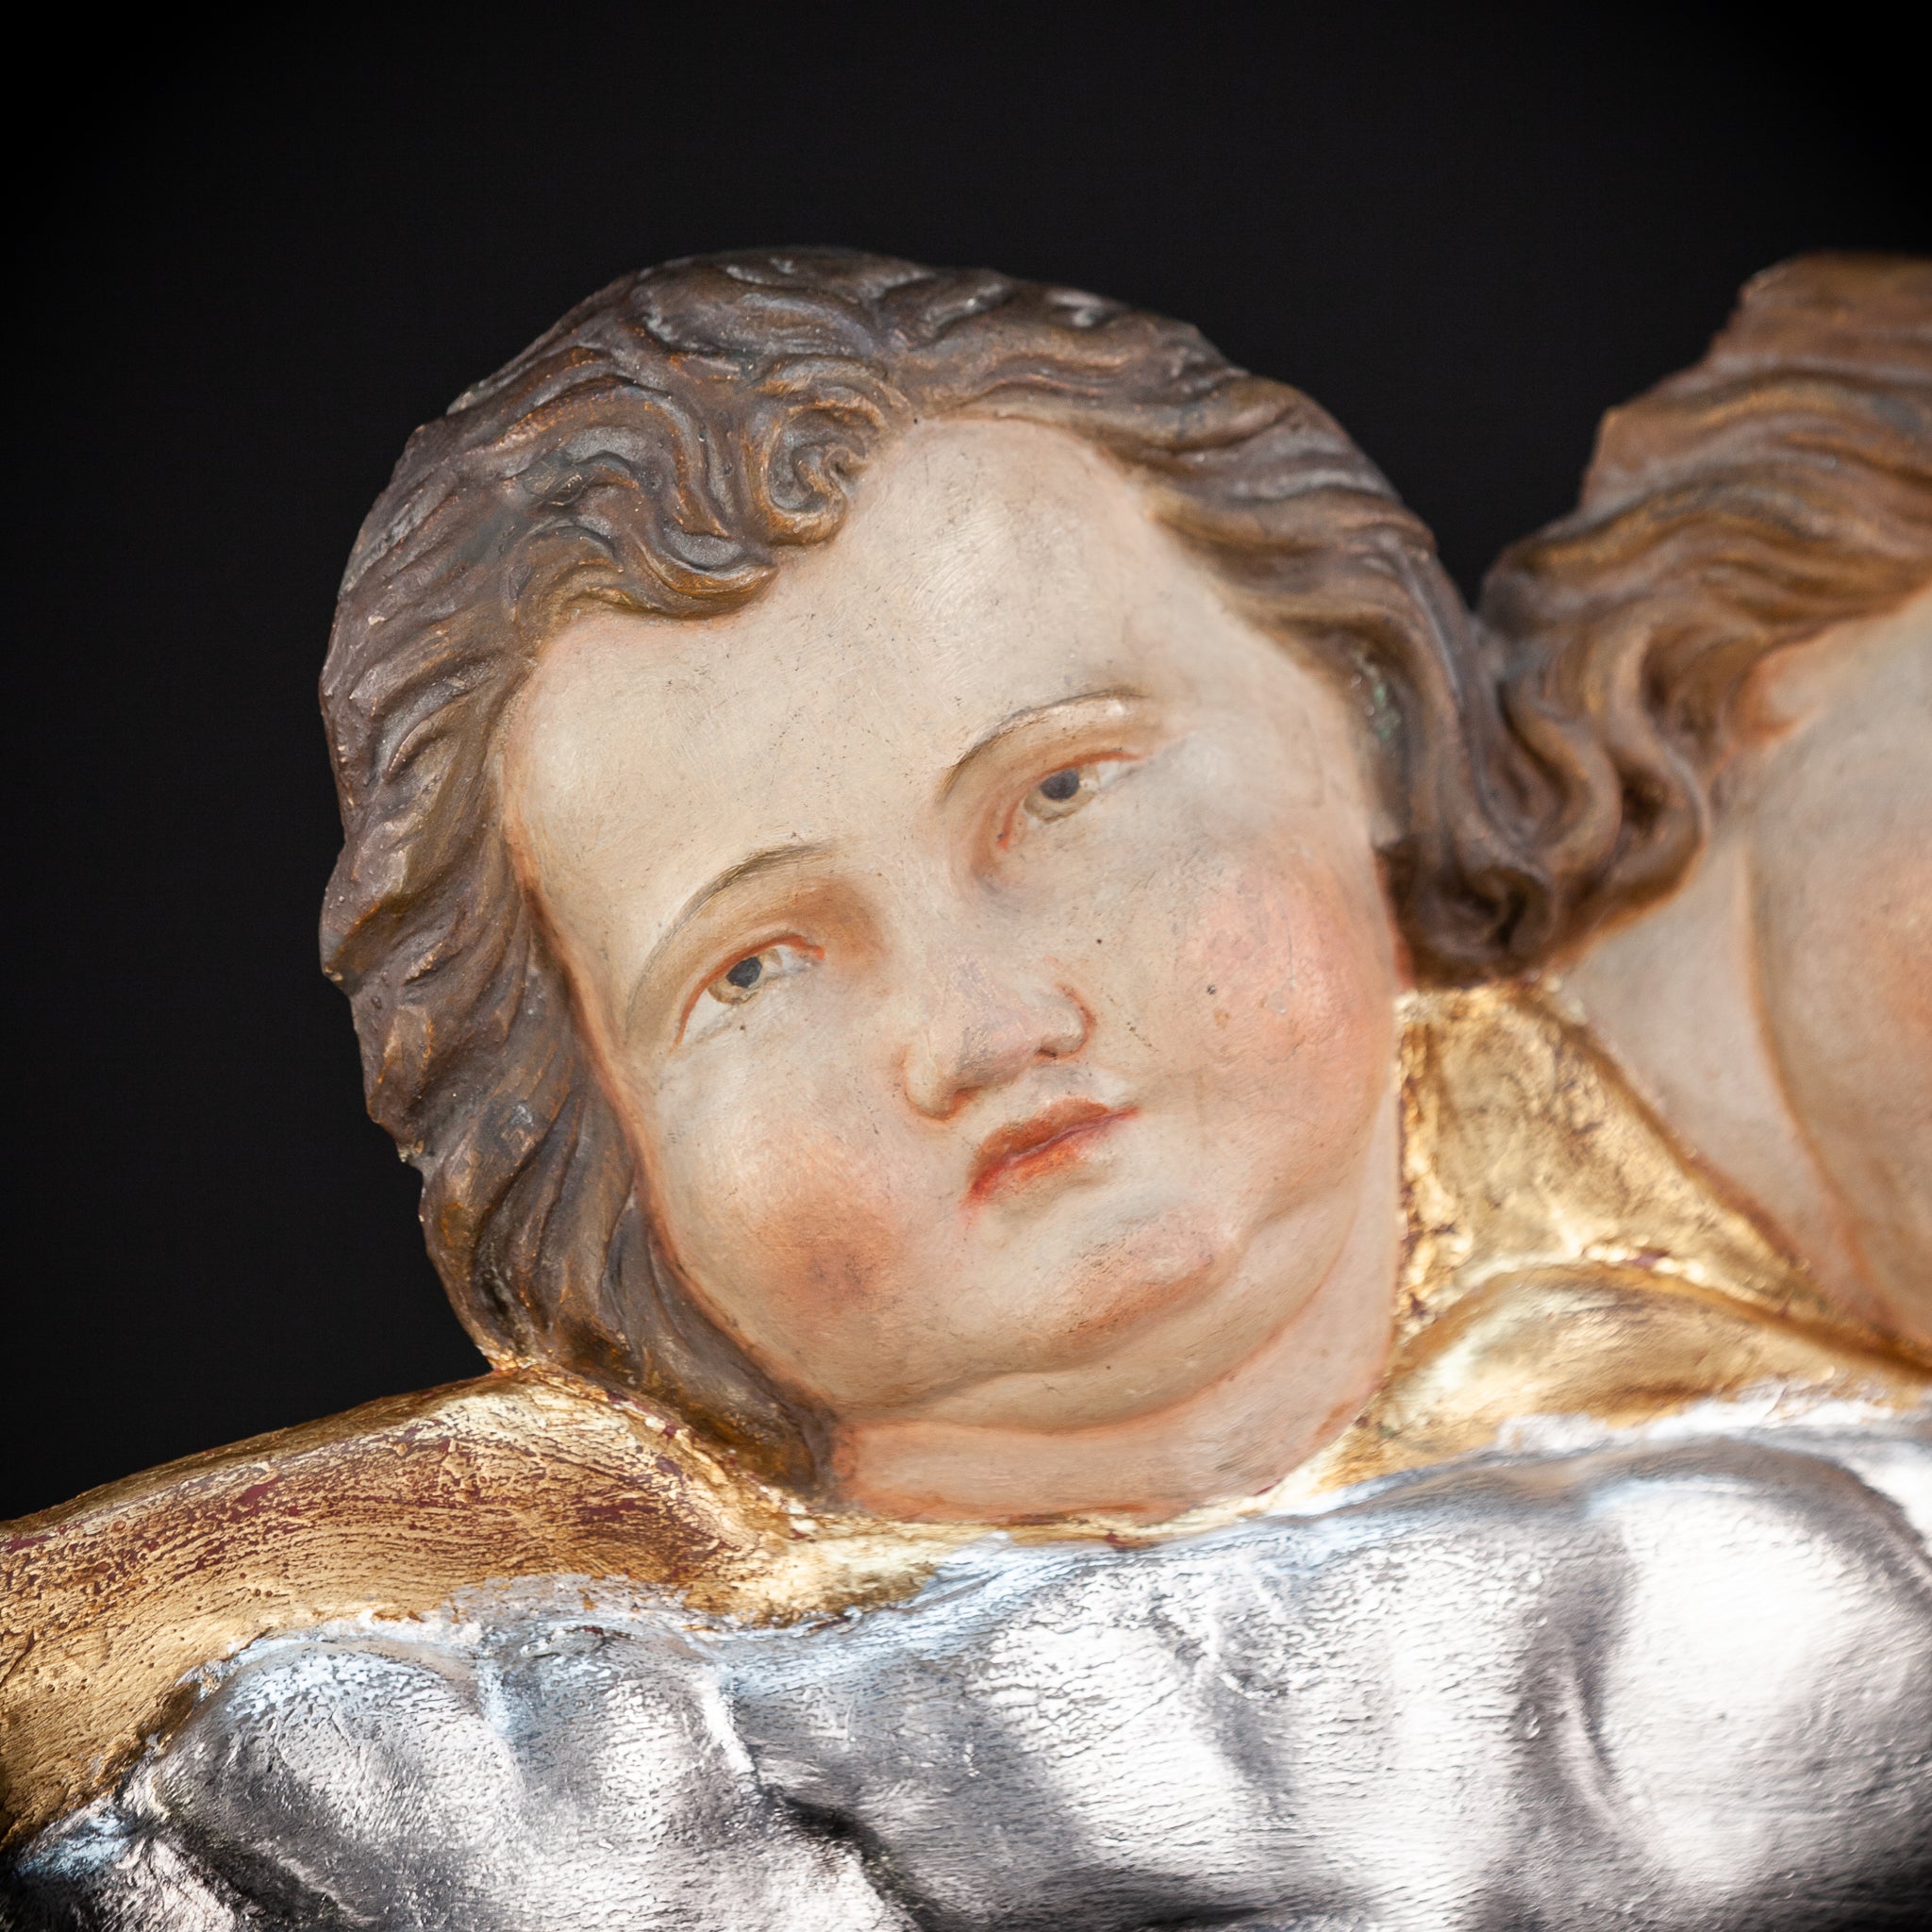 Pair of Angels Antique Wooden Relief Sculpture | 1800s Antique 22.8" / 45 cm